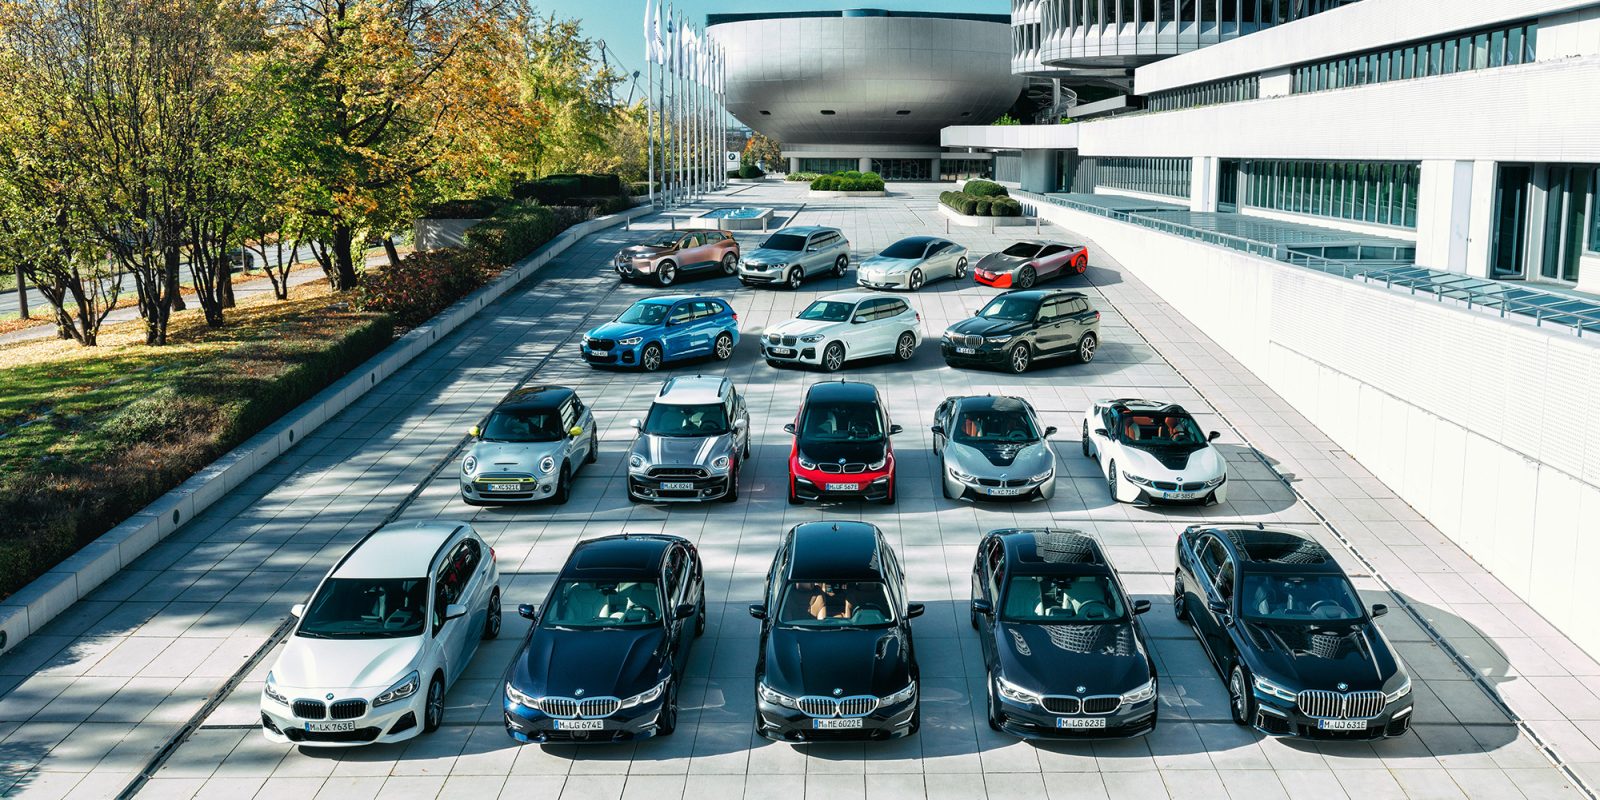 BMW electrified vehicles